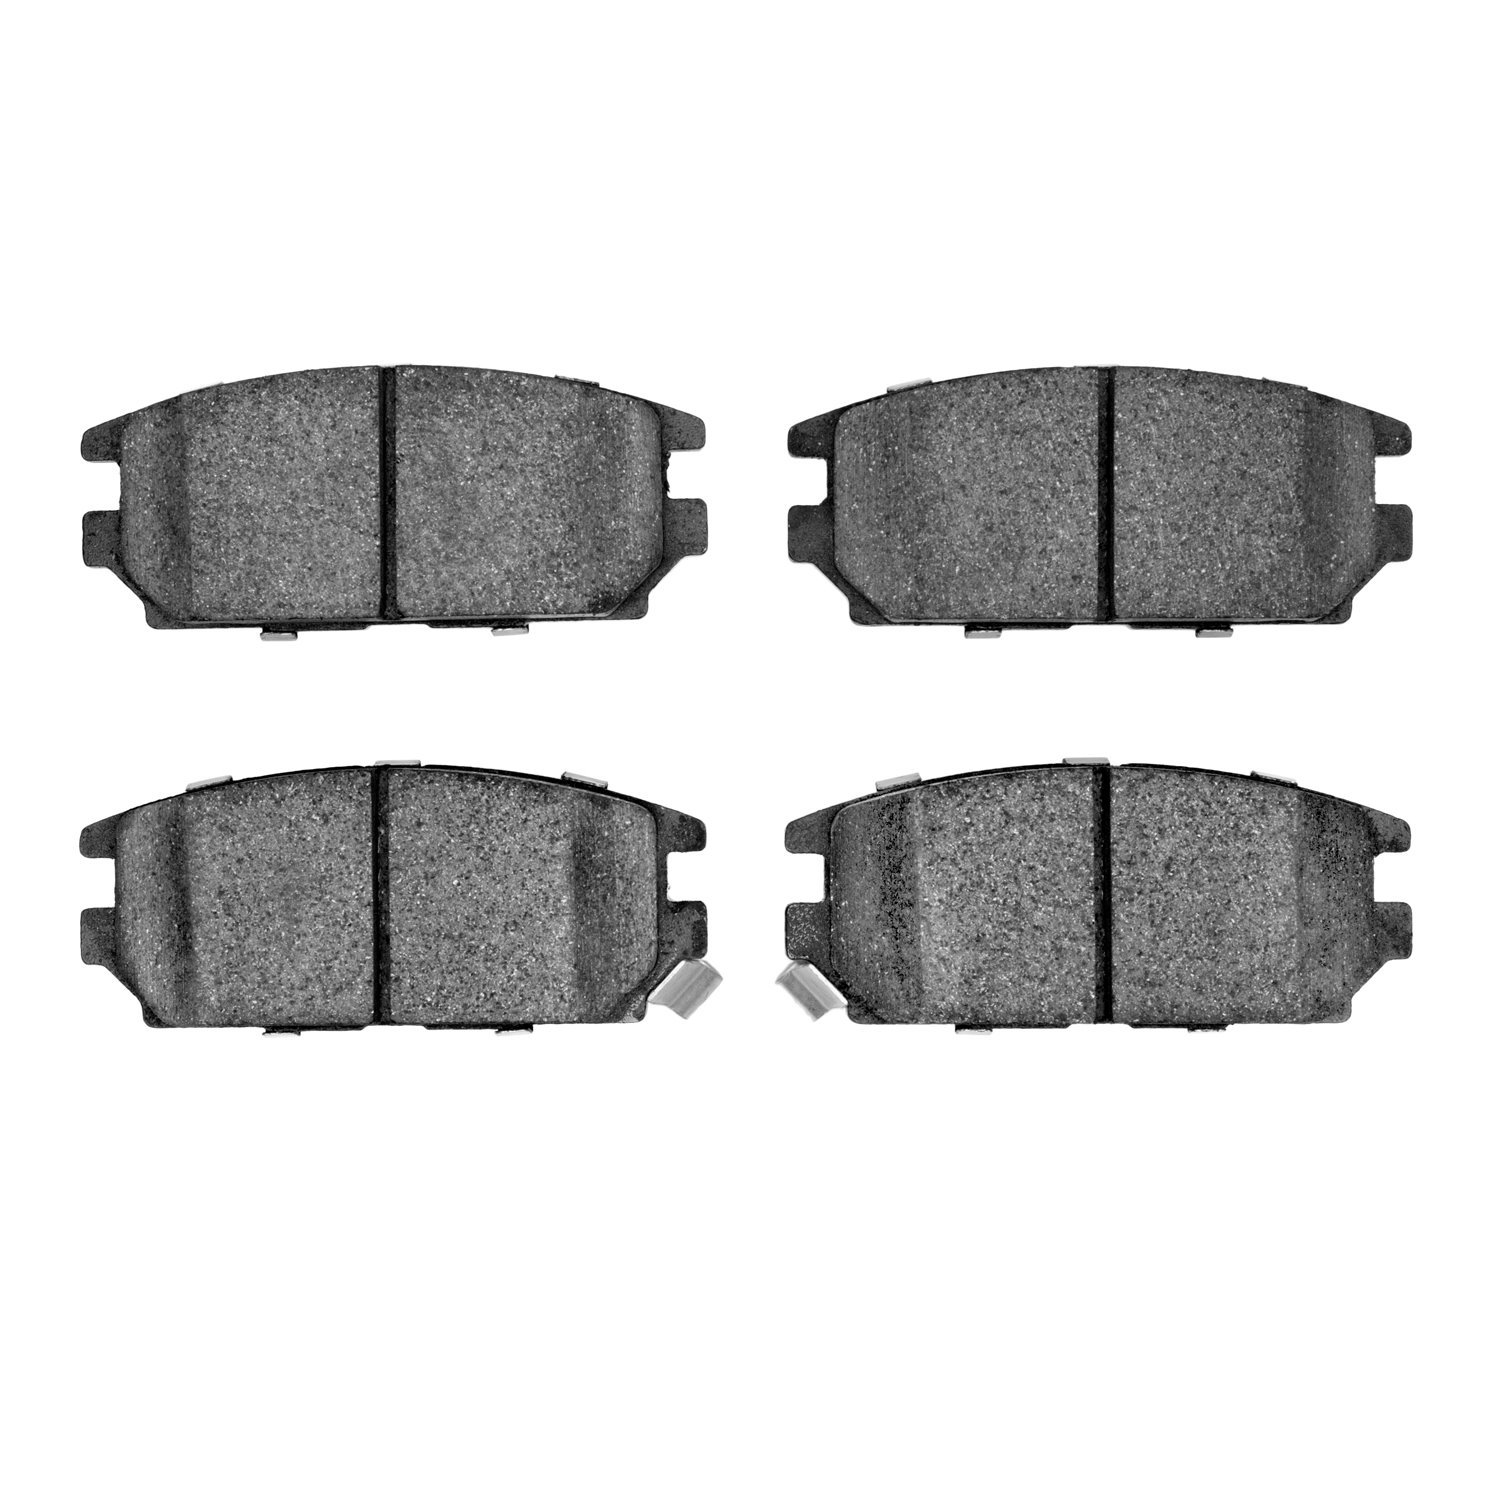 1310-0532-00 3000-Series Ceramic Brake Pads, 1991-2012 Multiple Makes/Models, Position: Rear